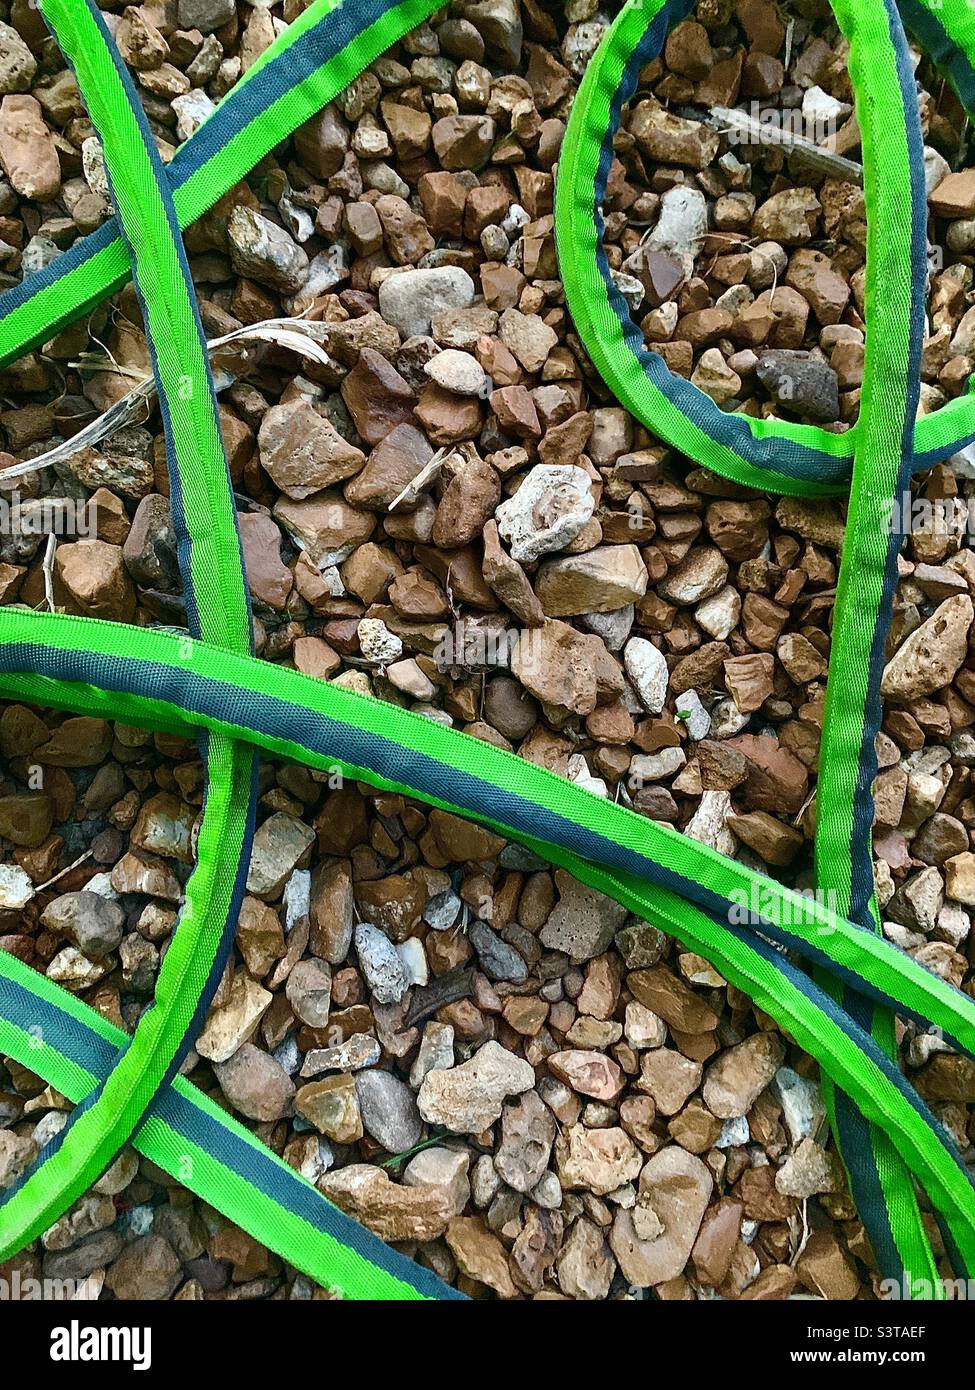 Vivid green garden hose on background of river rocks Stock Photo